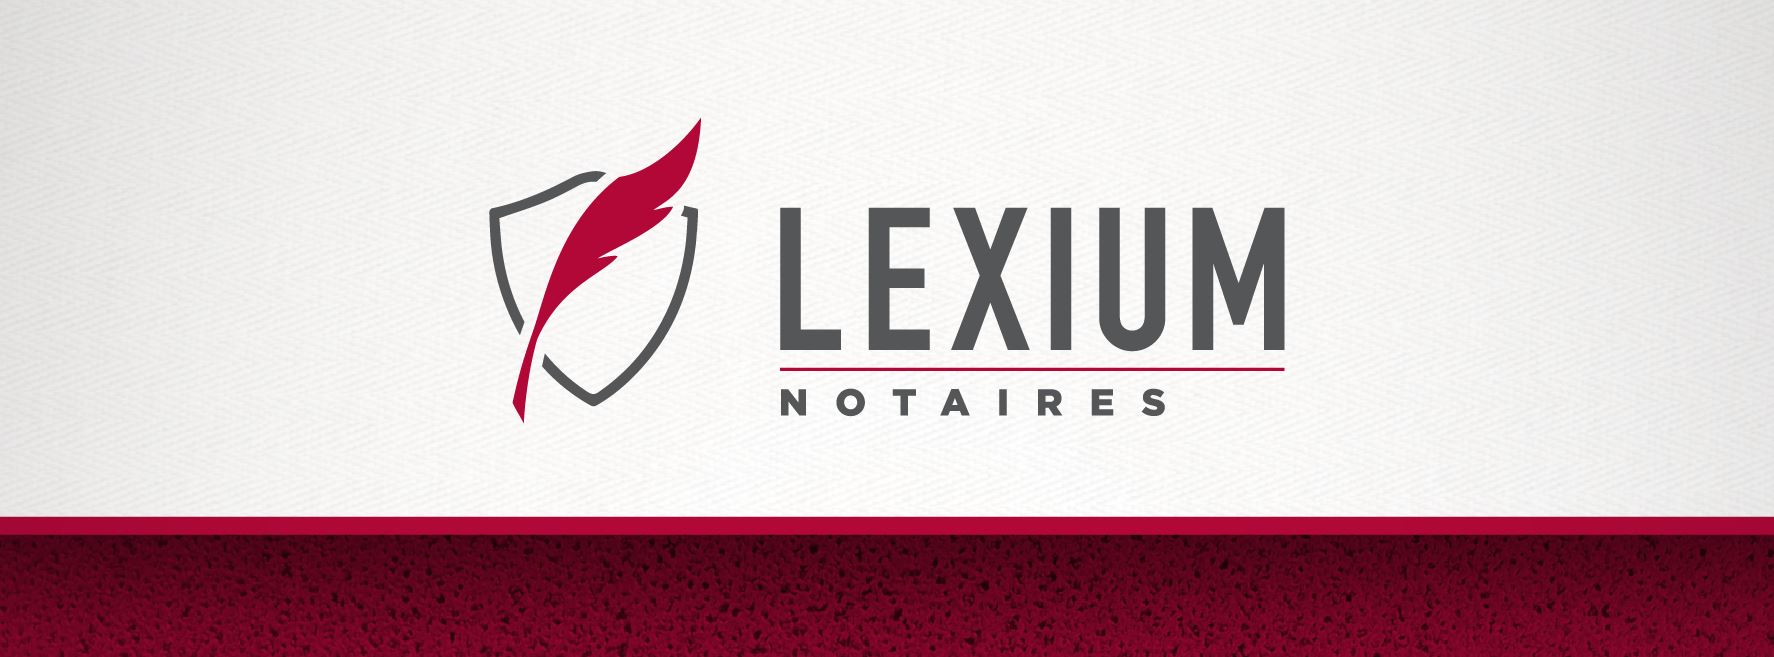 Lexium Notaires - Services Notariaux